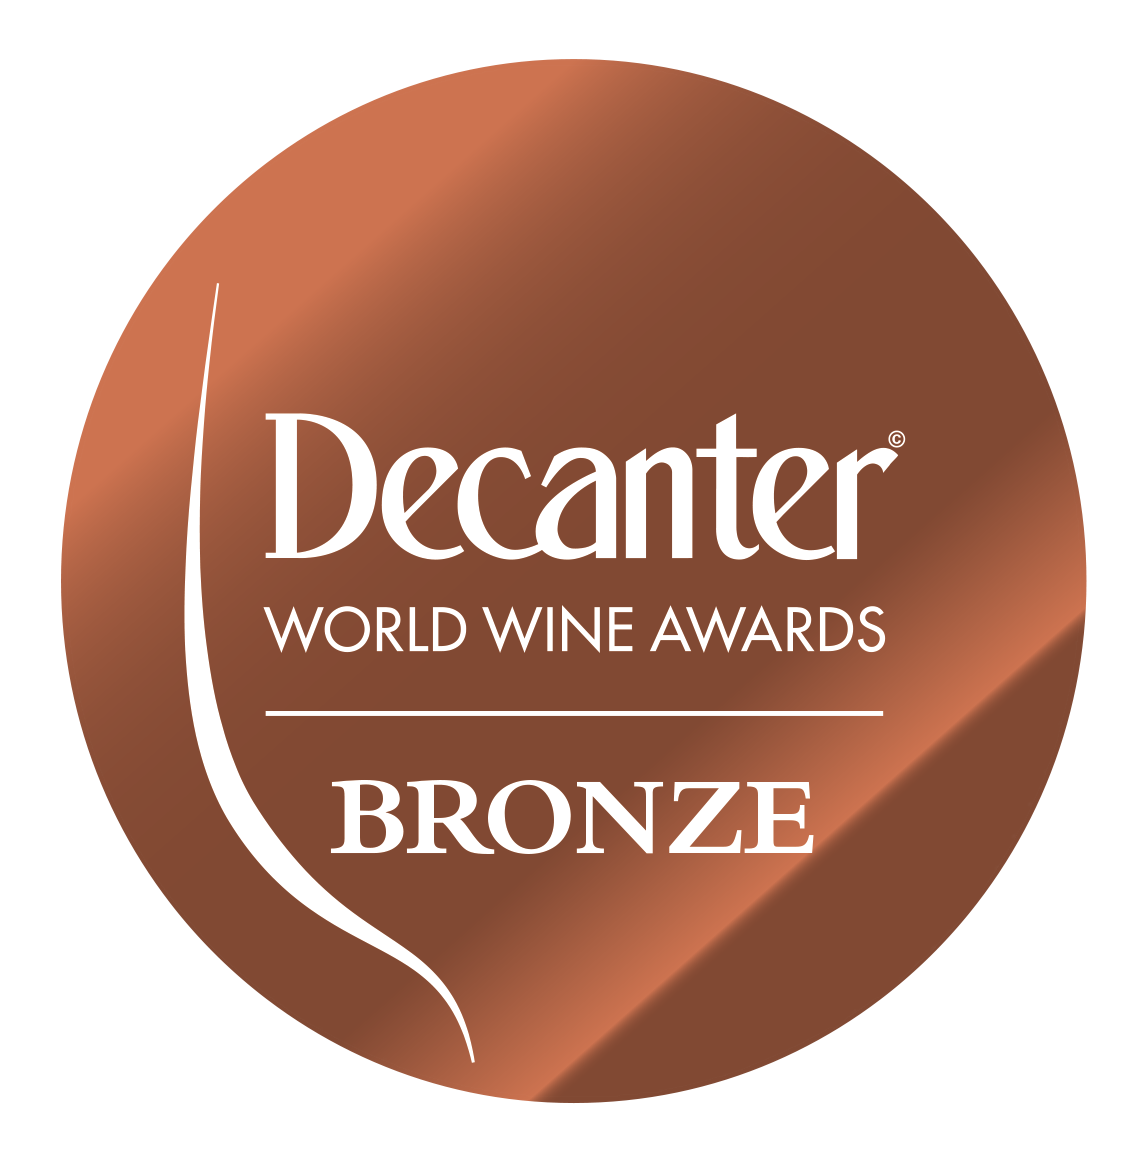 2012 vintage, winner of the Bronze Medal at the 2019 Decanter World Wine Awards, London (United Kingdom).